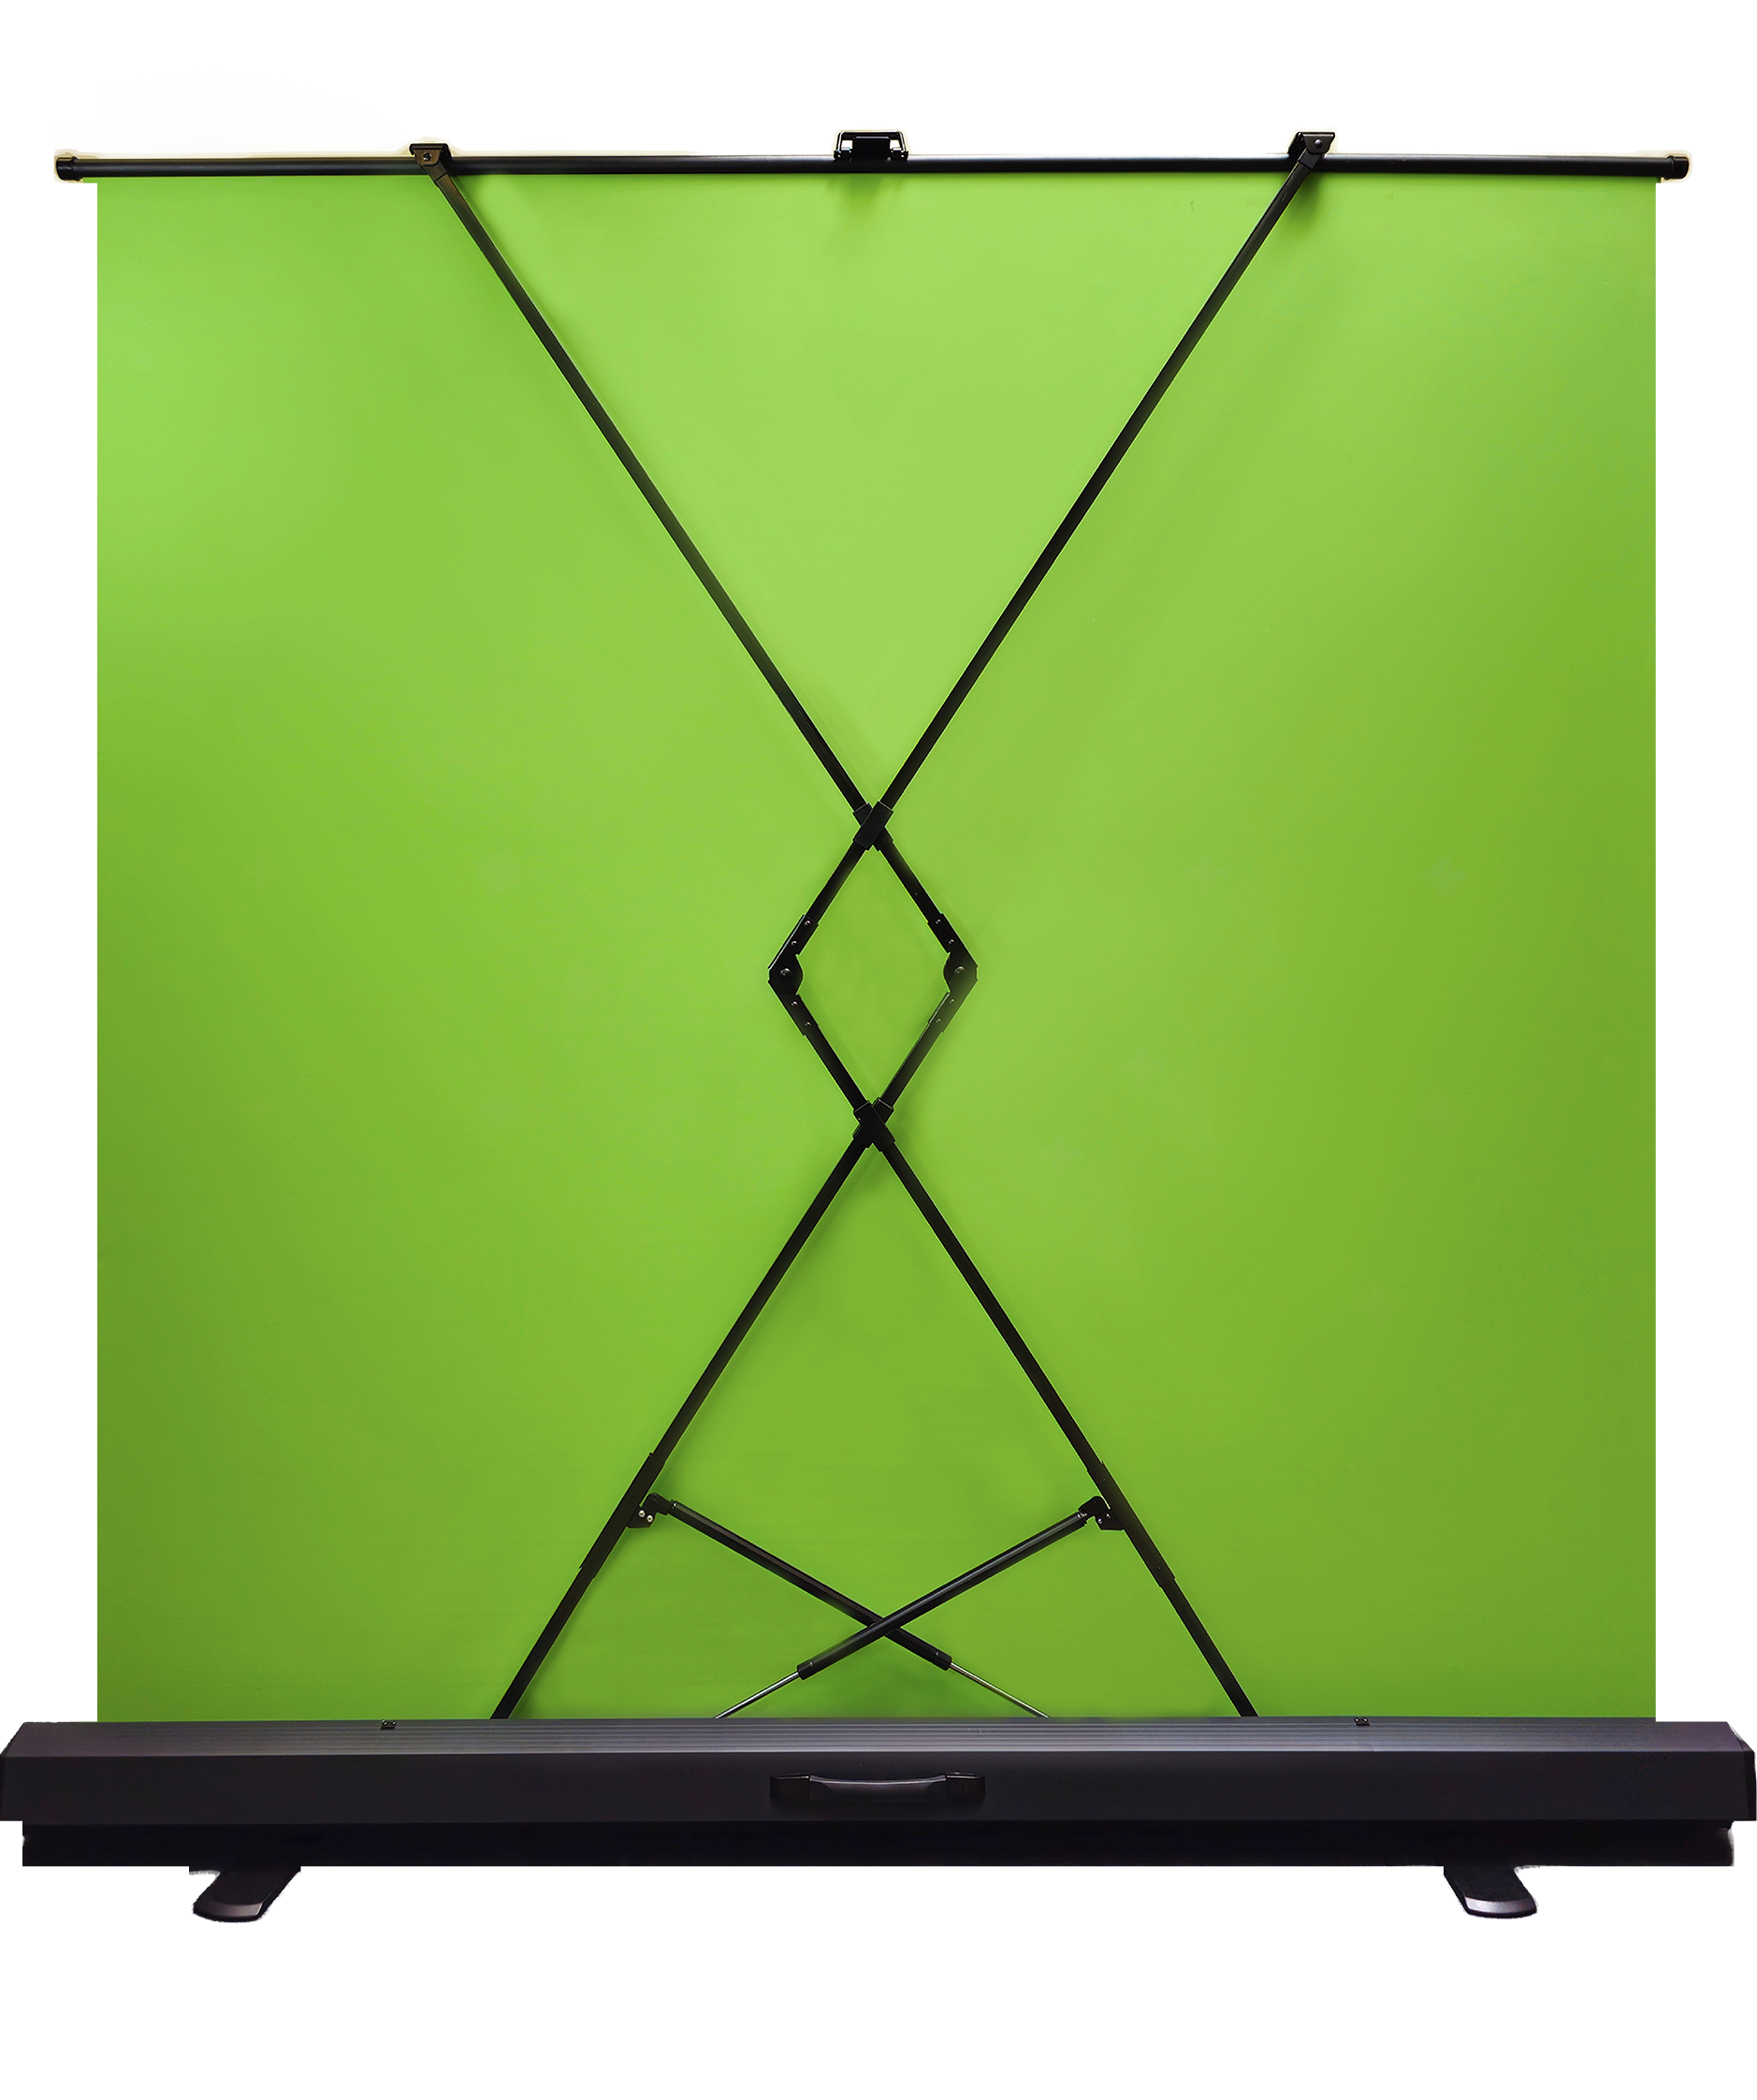 Pixio Green Screen XL Wide/XL Ultrawide